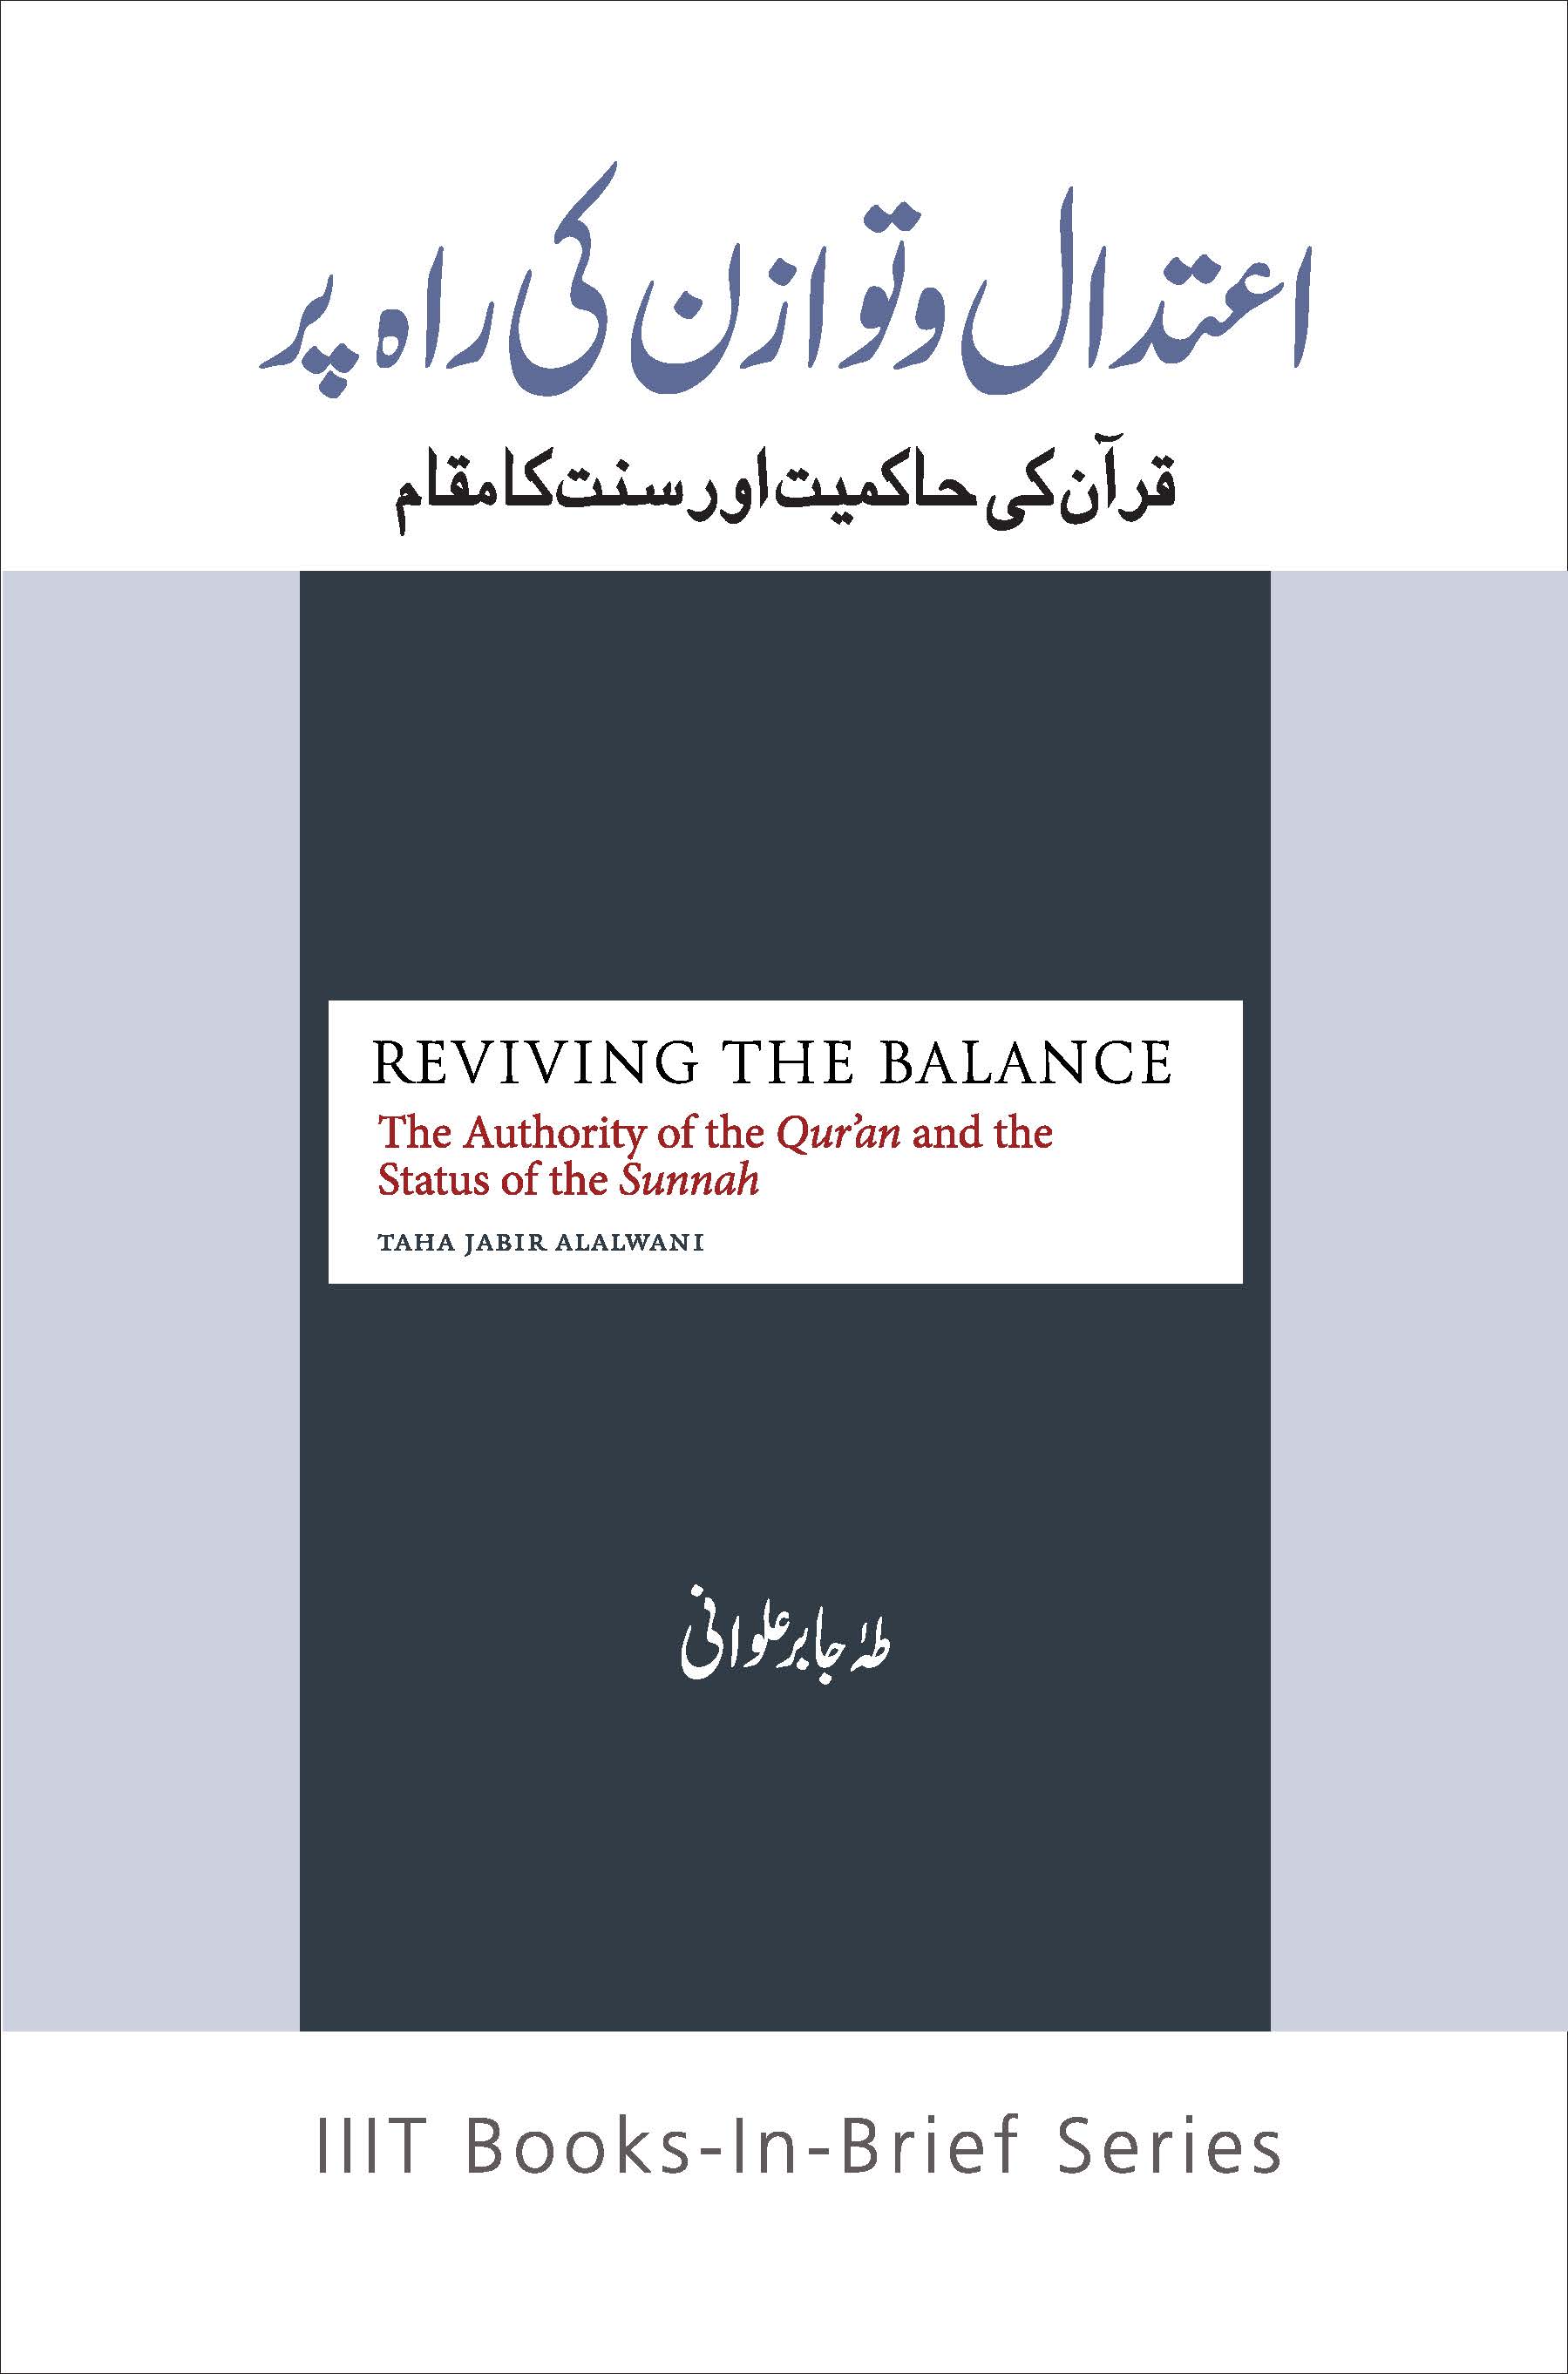 Urdu: Etedal Wa Tawazun ki Rah Par: Qur’an ki Hakimiyat Aur Sunnat ka Maqam (Book-in-Brief: Reviving the Balance: The Authority of the Qur’an and the Status of the Sunnah)